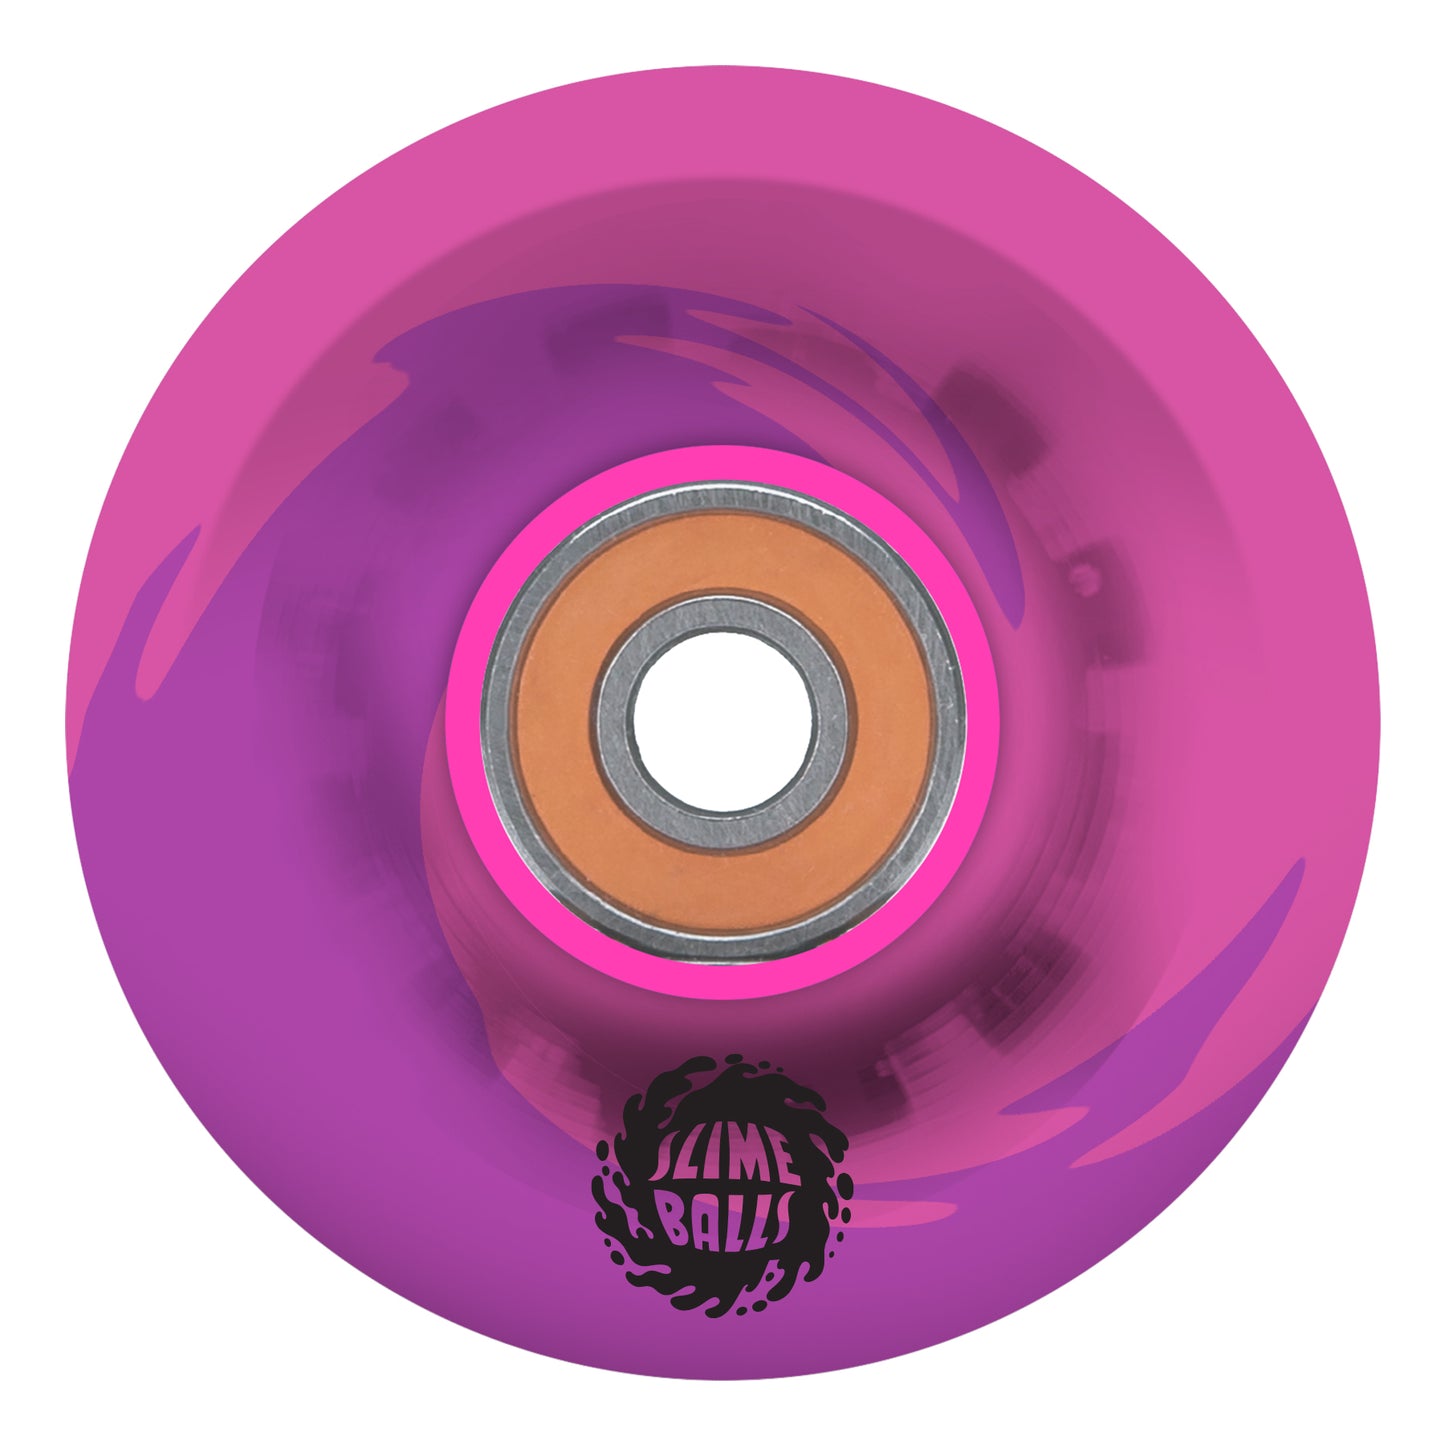 Slime Balls 60mm Light Ups OG Slime Pink/Purple 78a  Skateboard Wheels